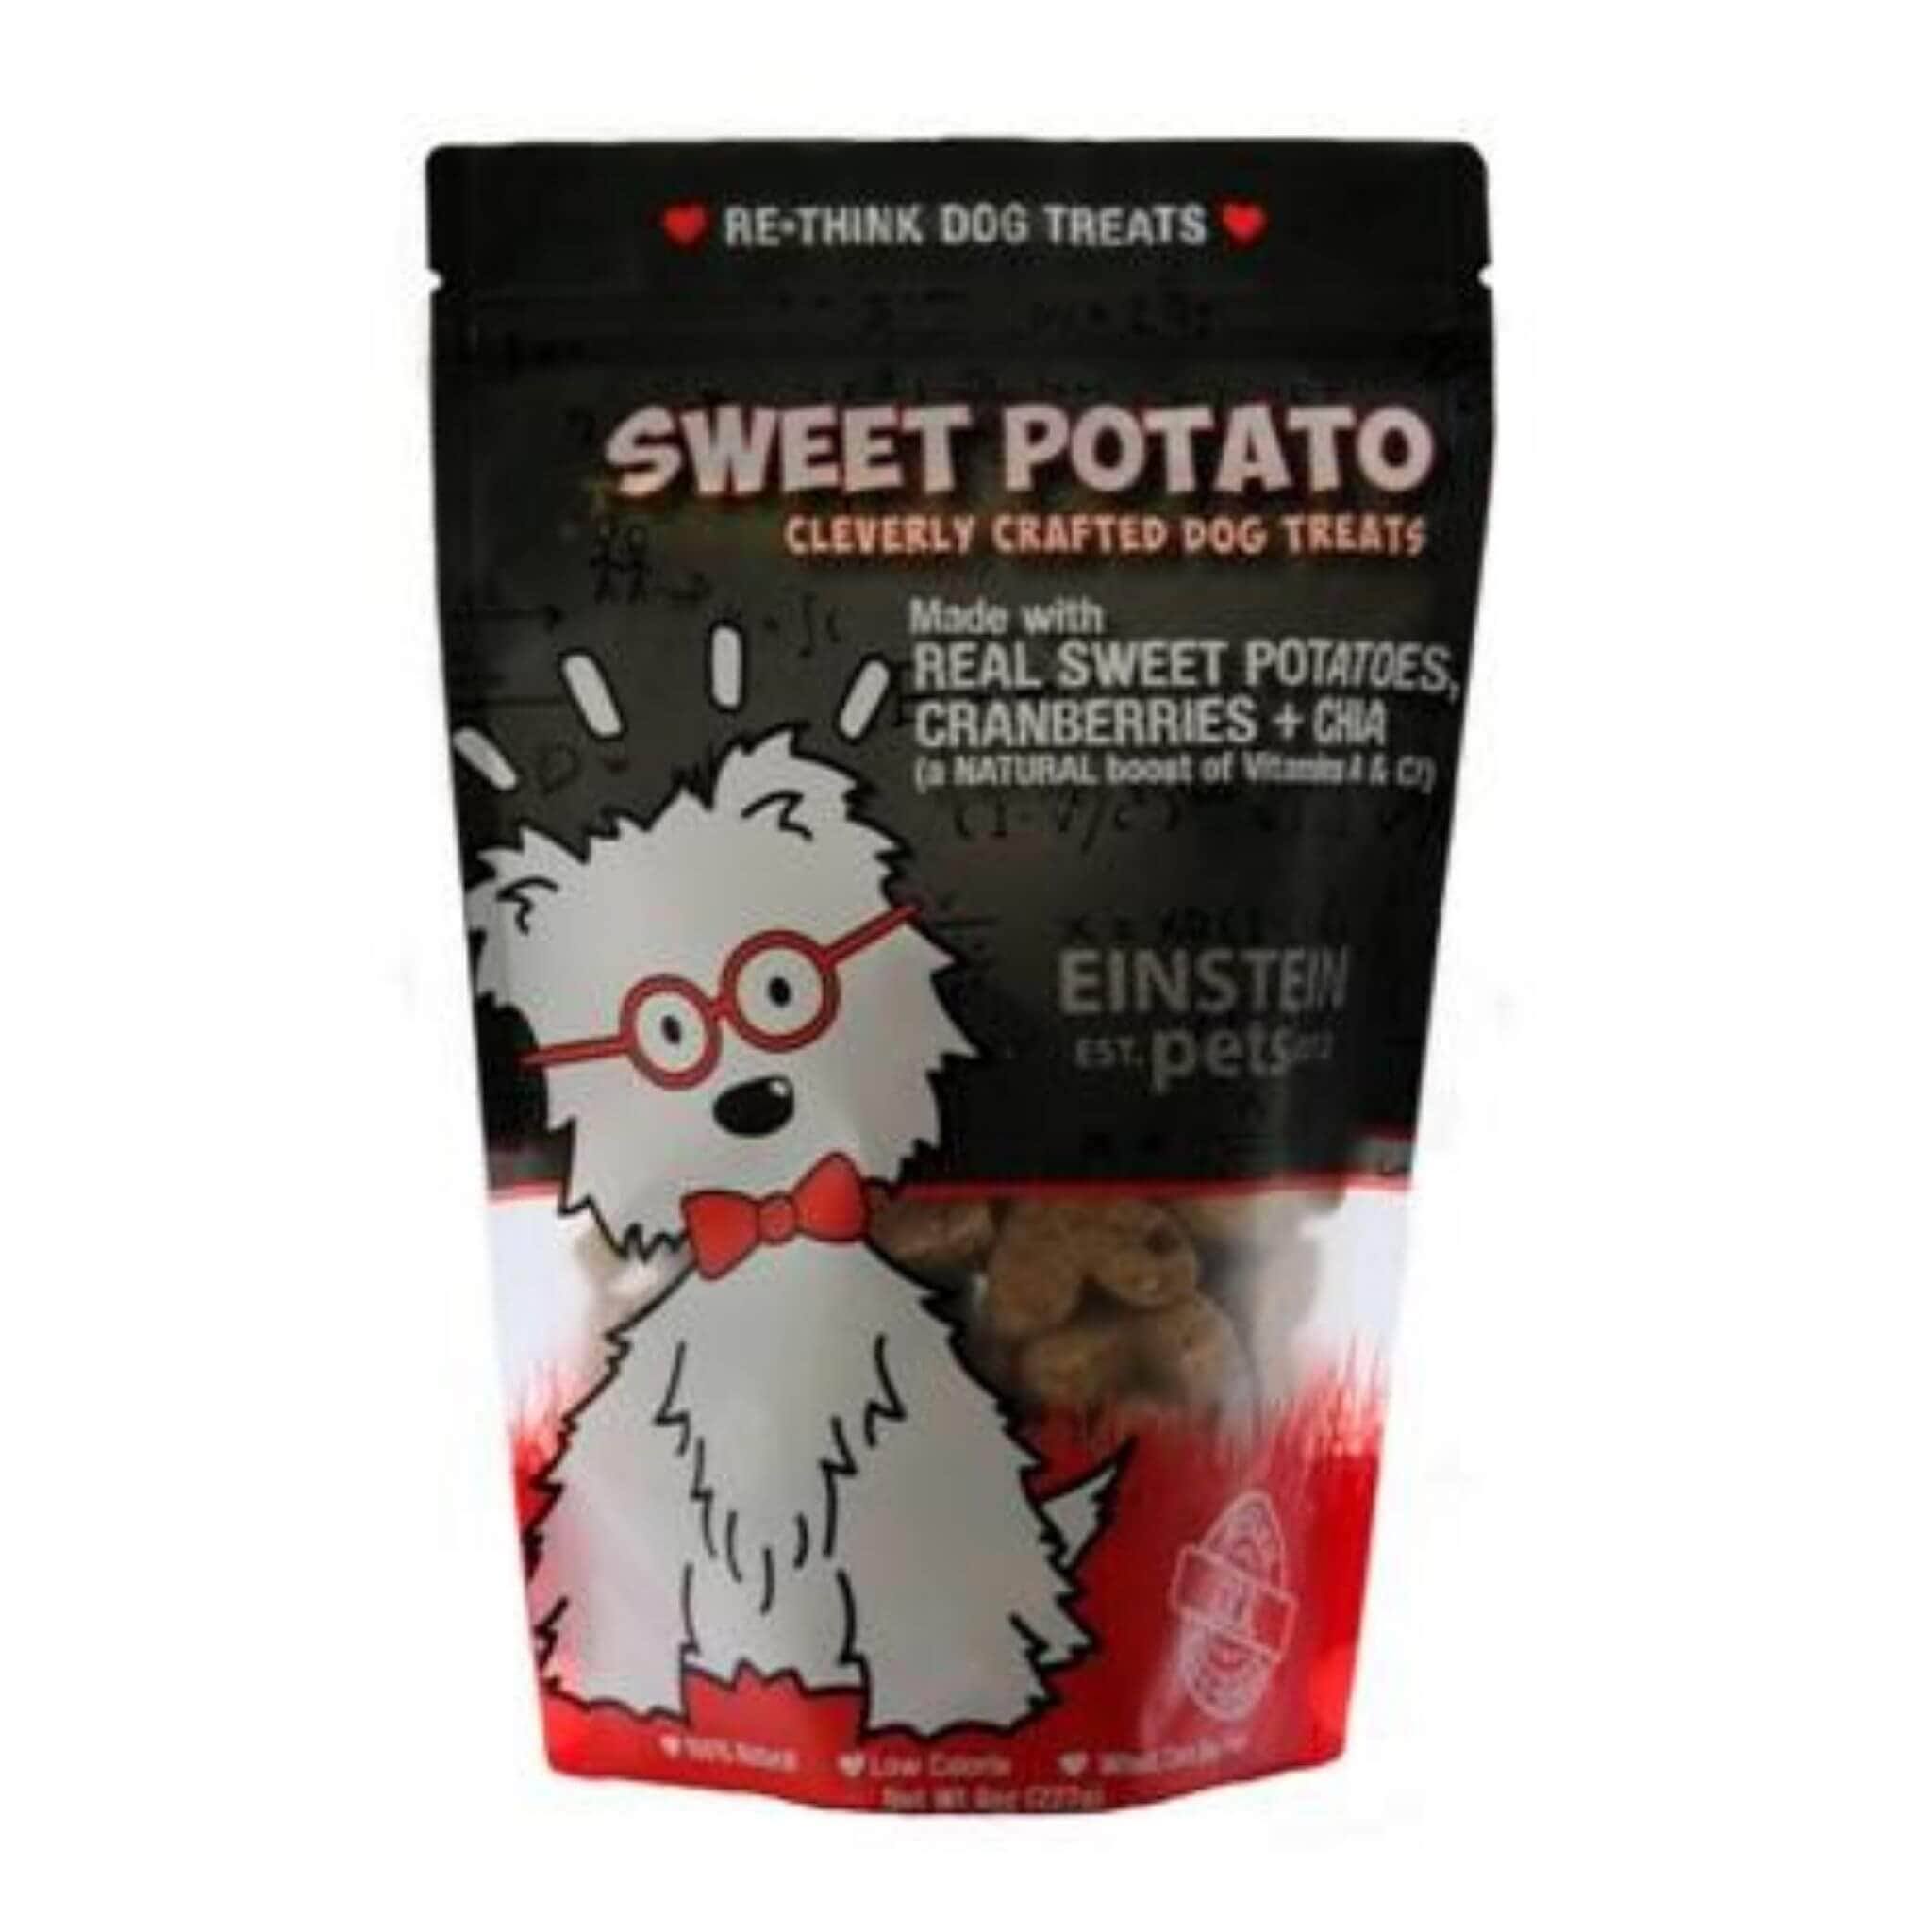 Einstein Pets Grain Free and Organic Dog Treats - Sweet Potato, 8oz